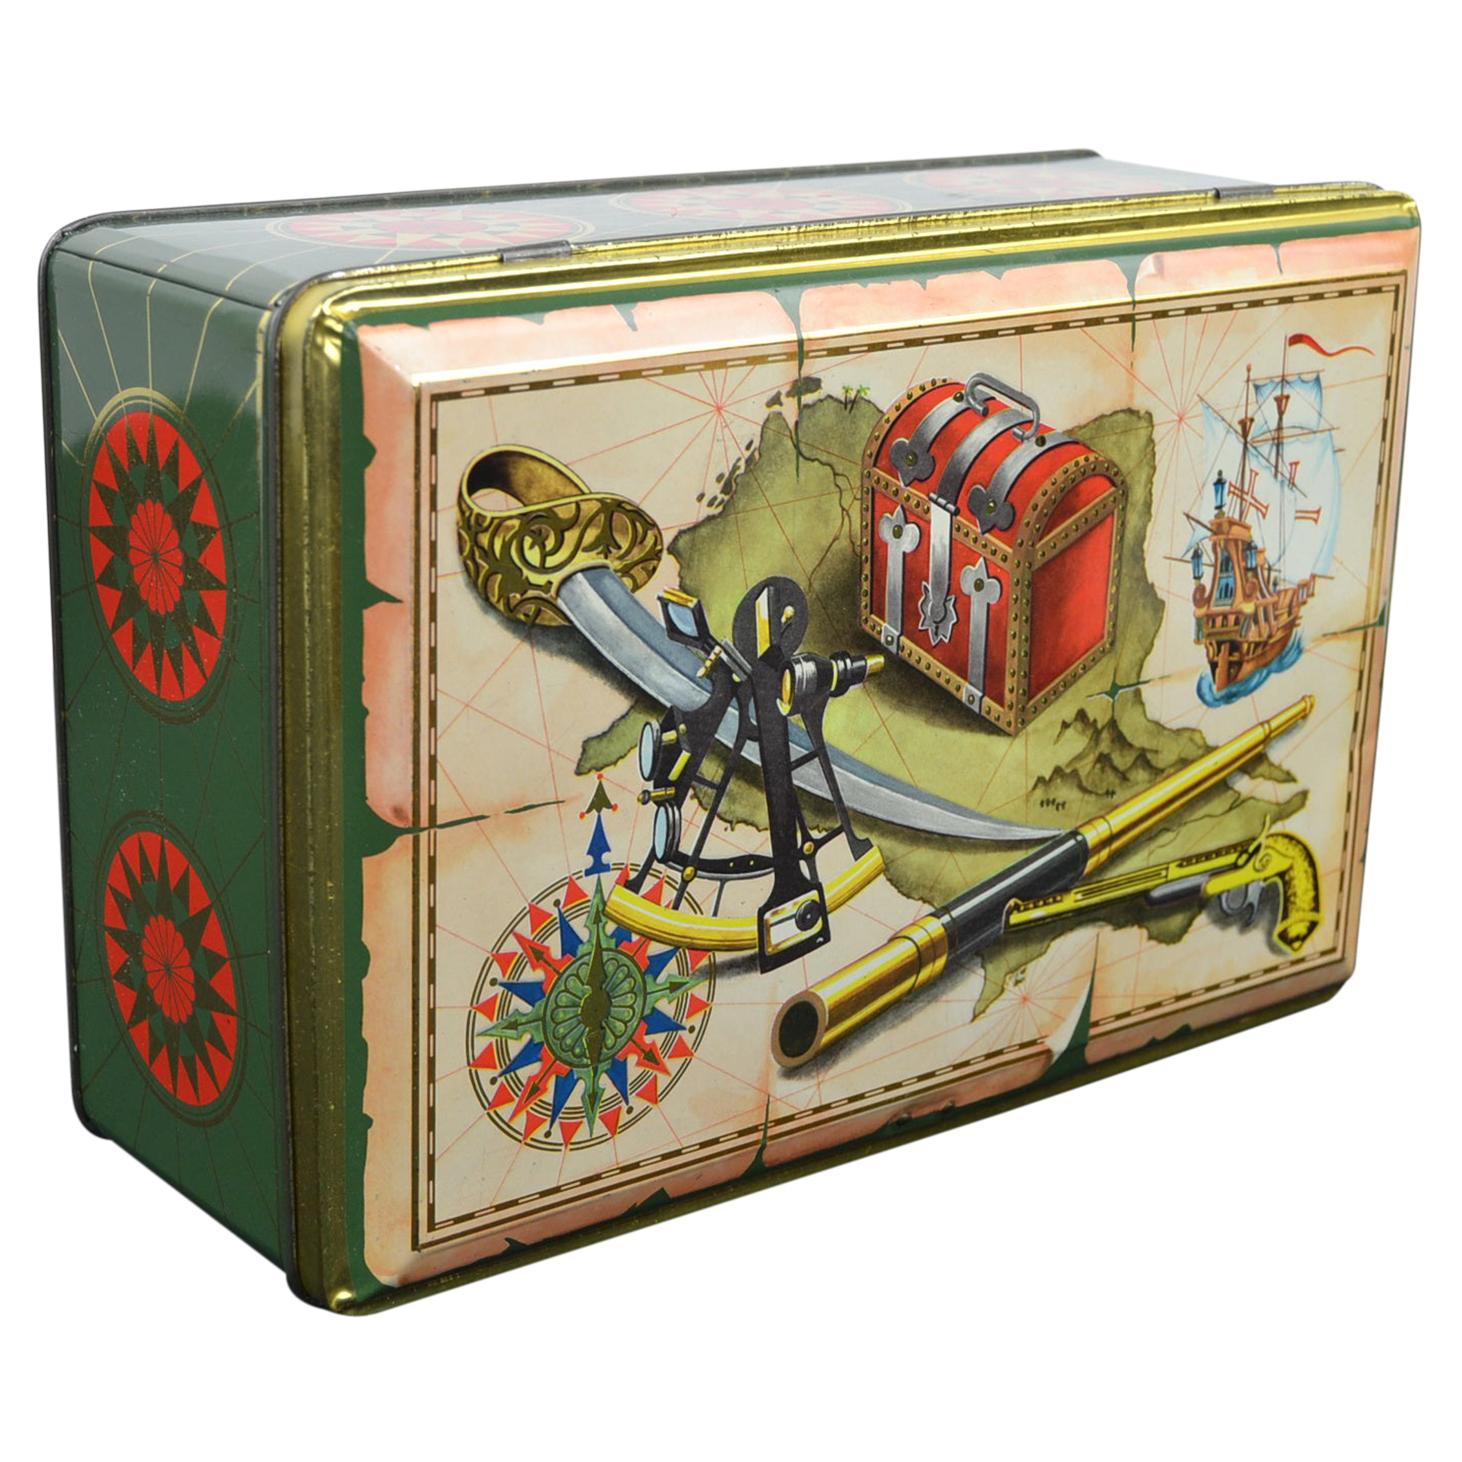 Tin box Theme Pirate, 1950s